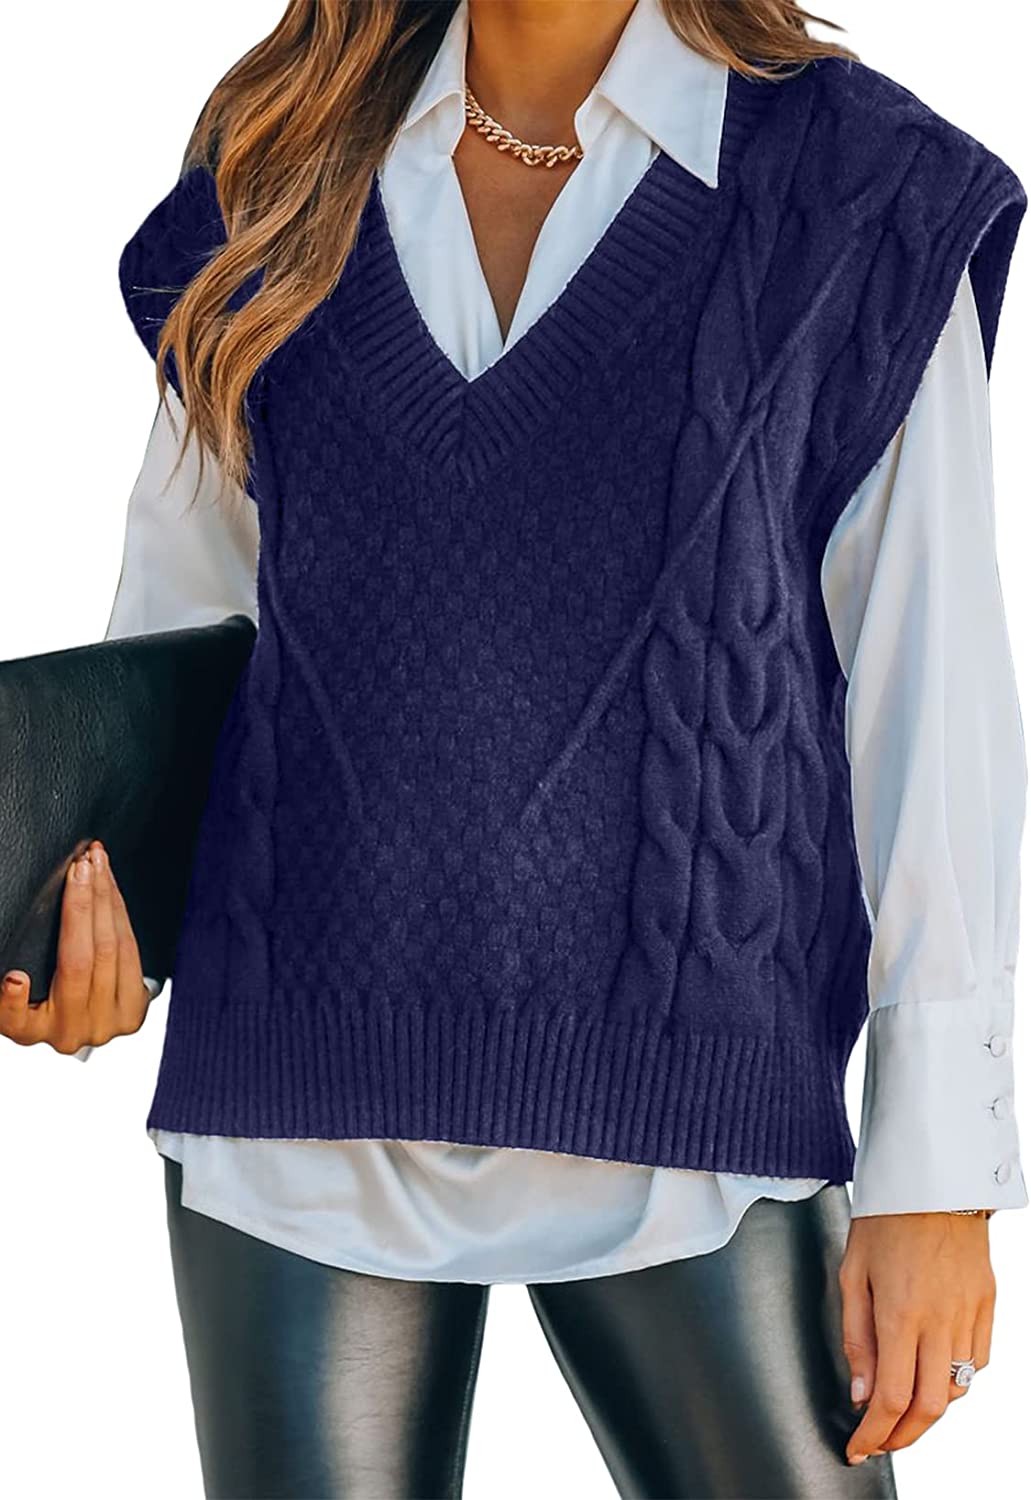 FARYSAYS Women's Sweater Vests V Neck Sleeveless Casual Oversized Knit  Sweater V | eBay